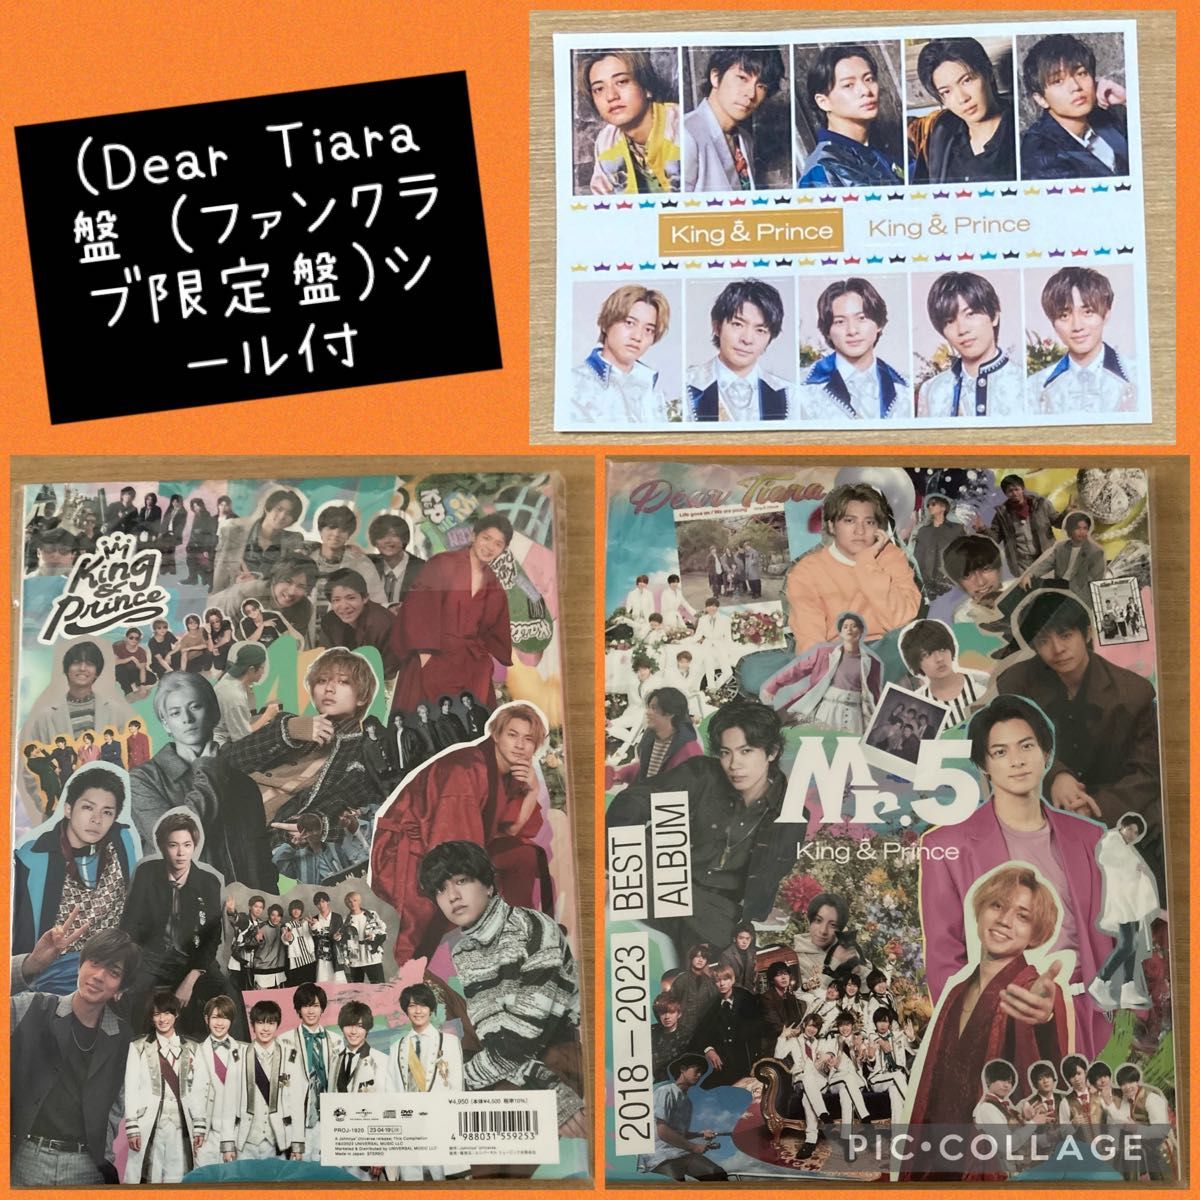 King ＆ Prince/Mr.5 (Dear Tiara盤 (ファンクラブ限定盤)) [2CD+DVD] ステッカー付き